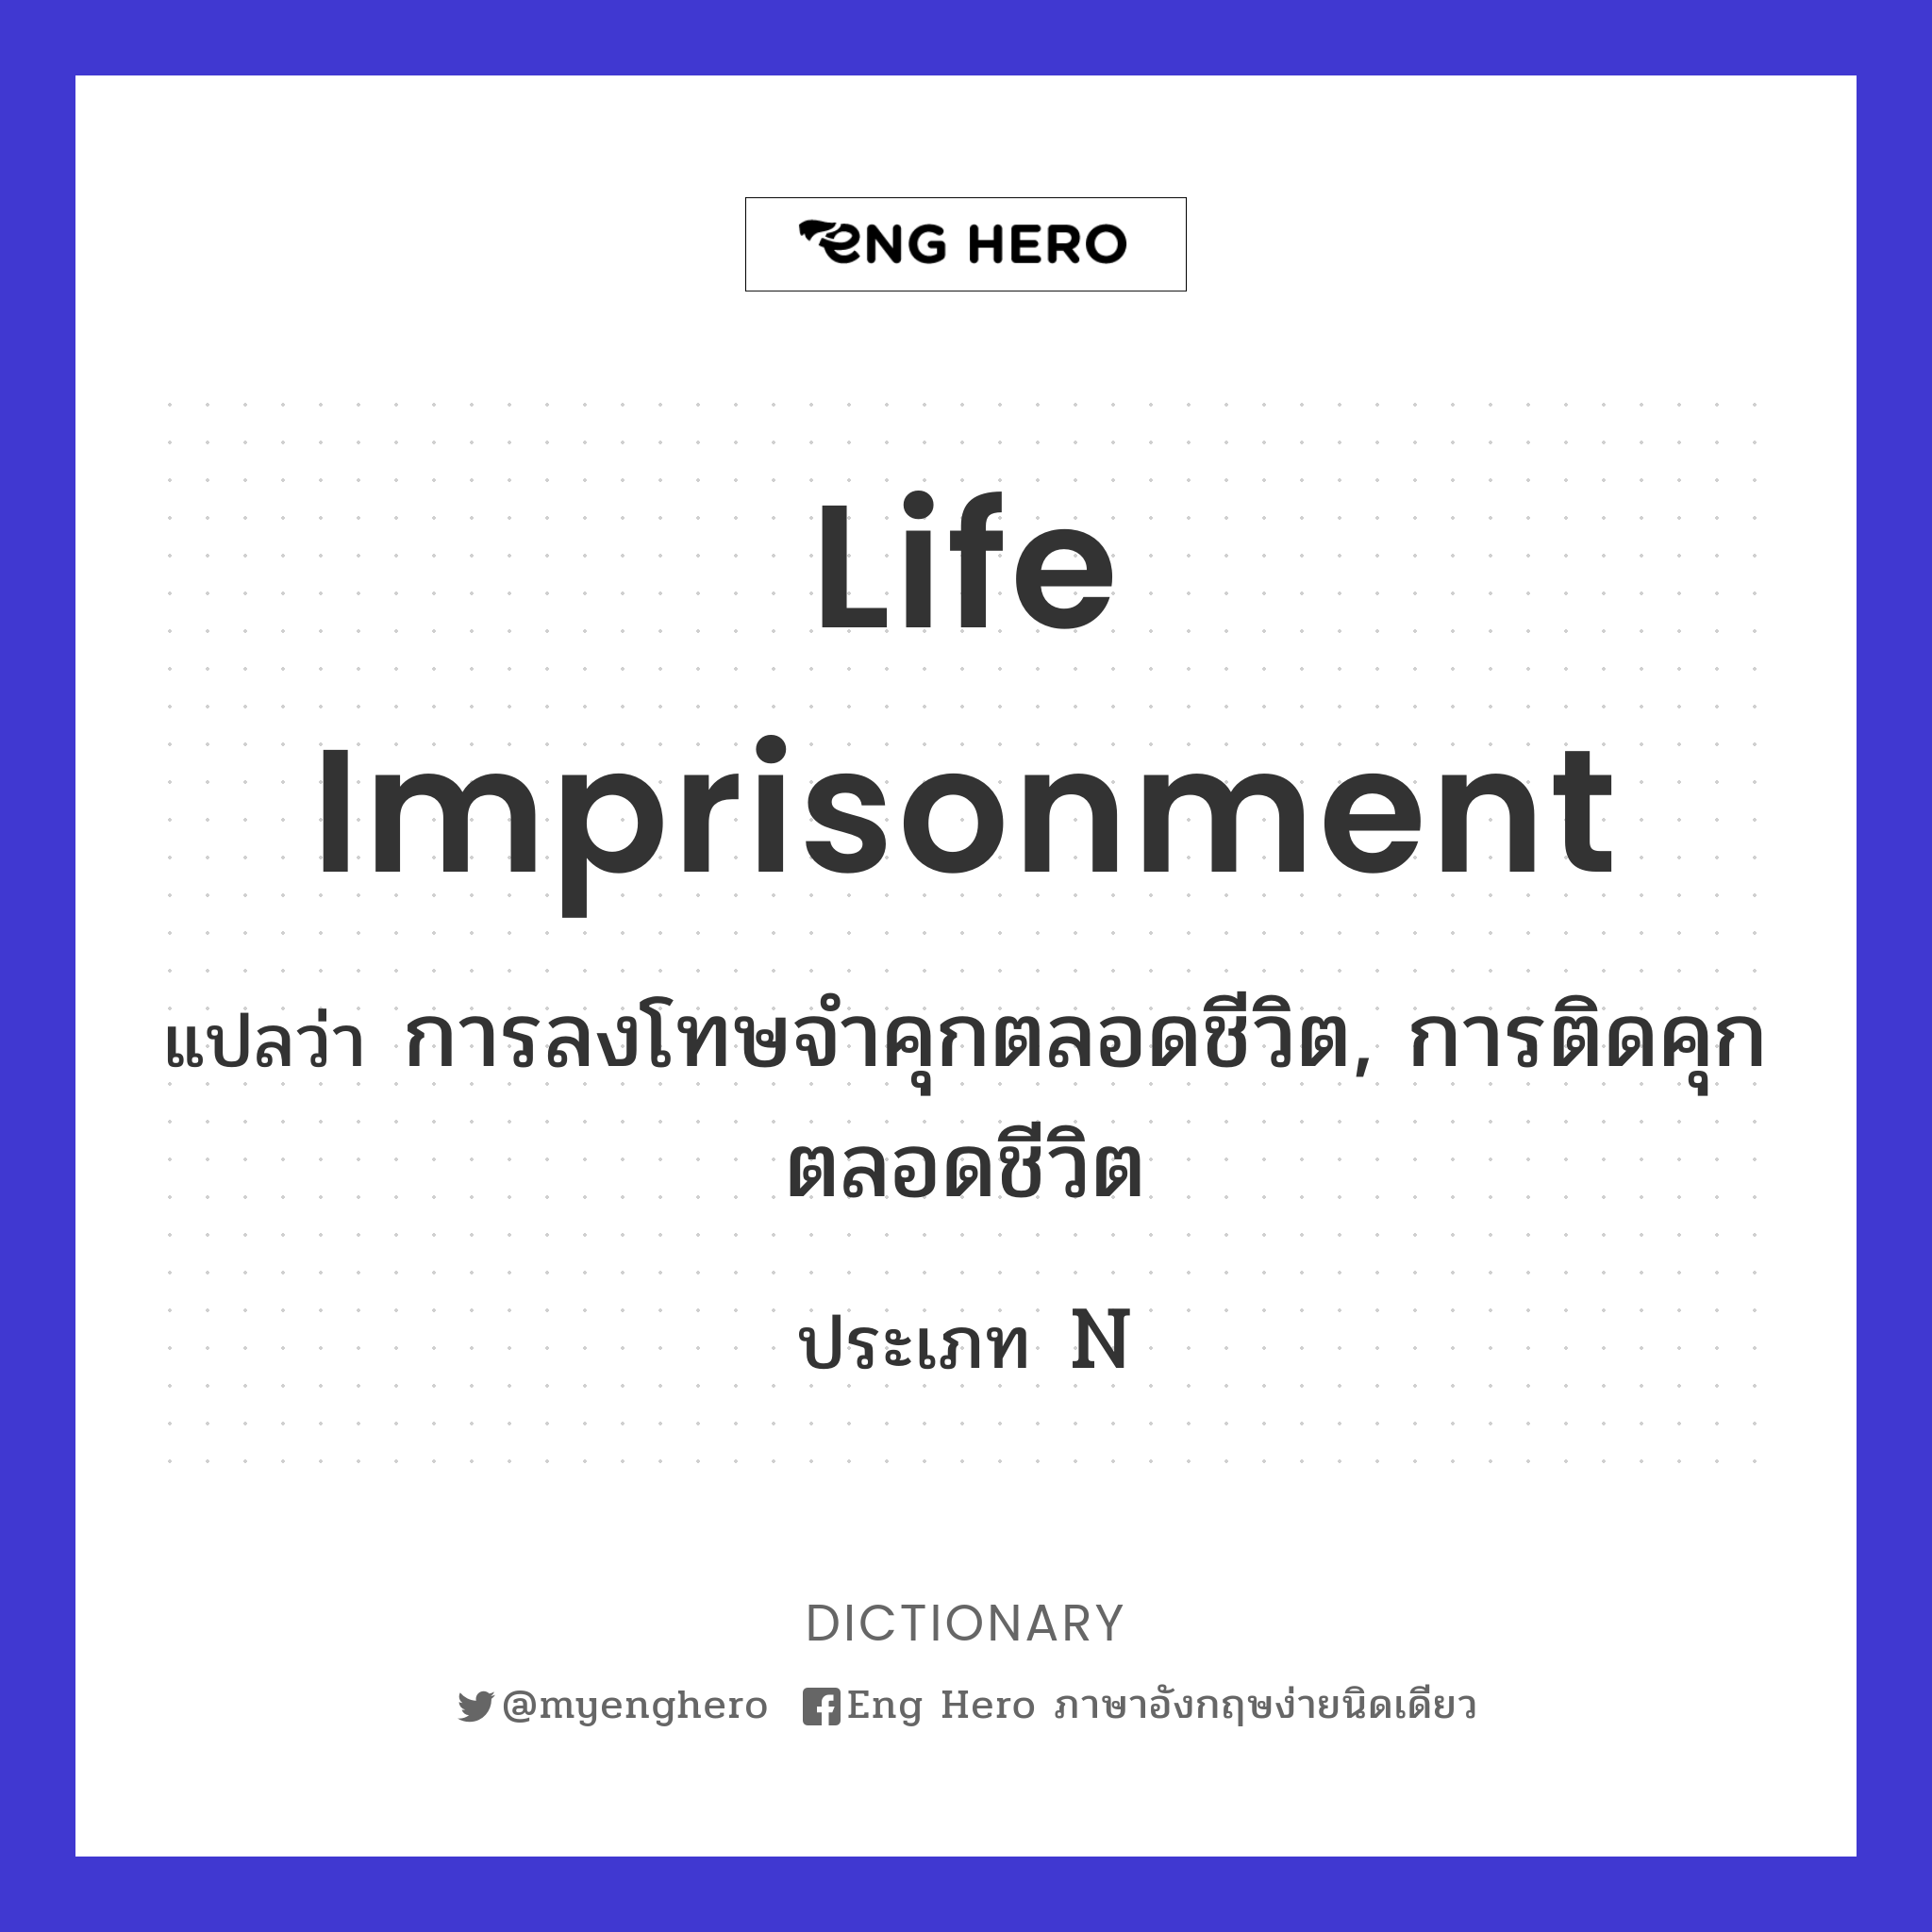 life imprisonment